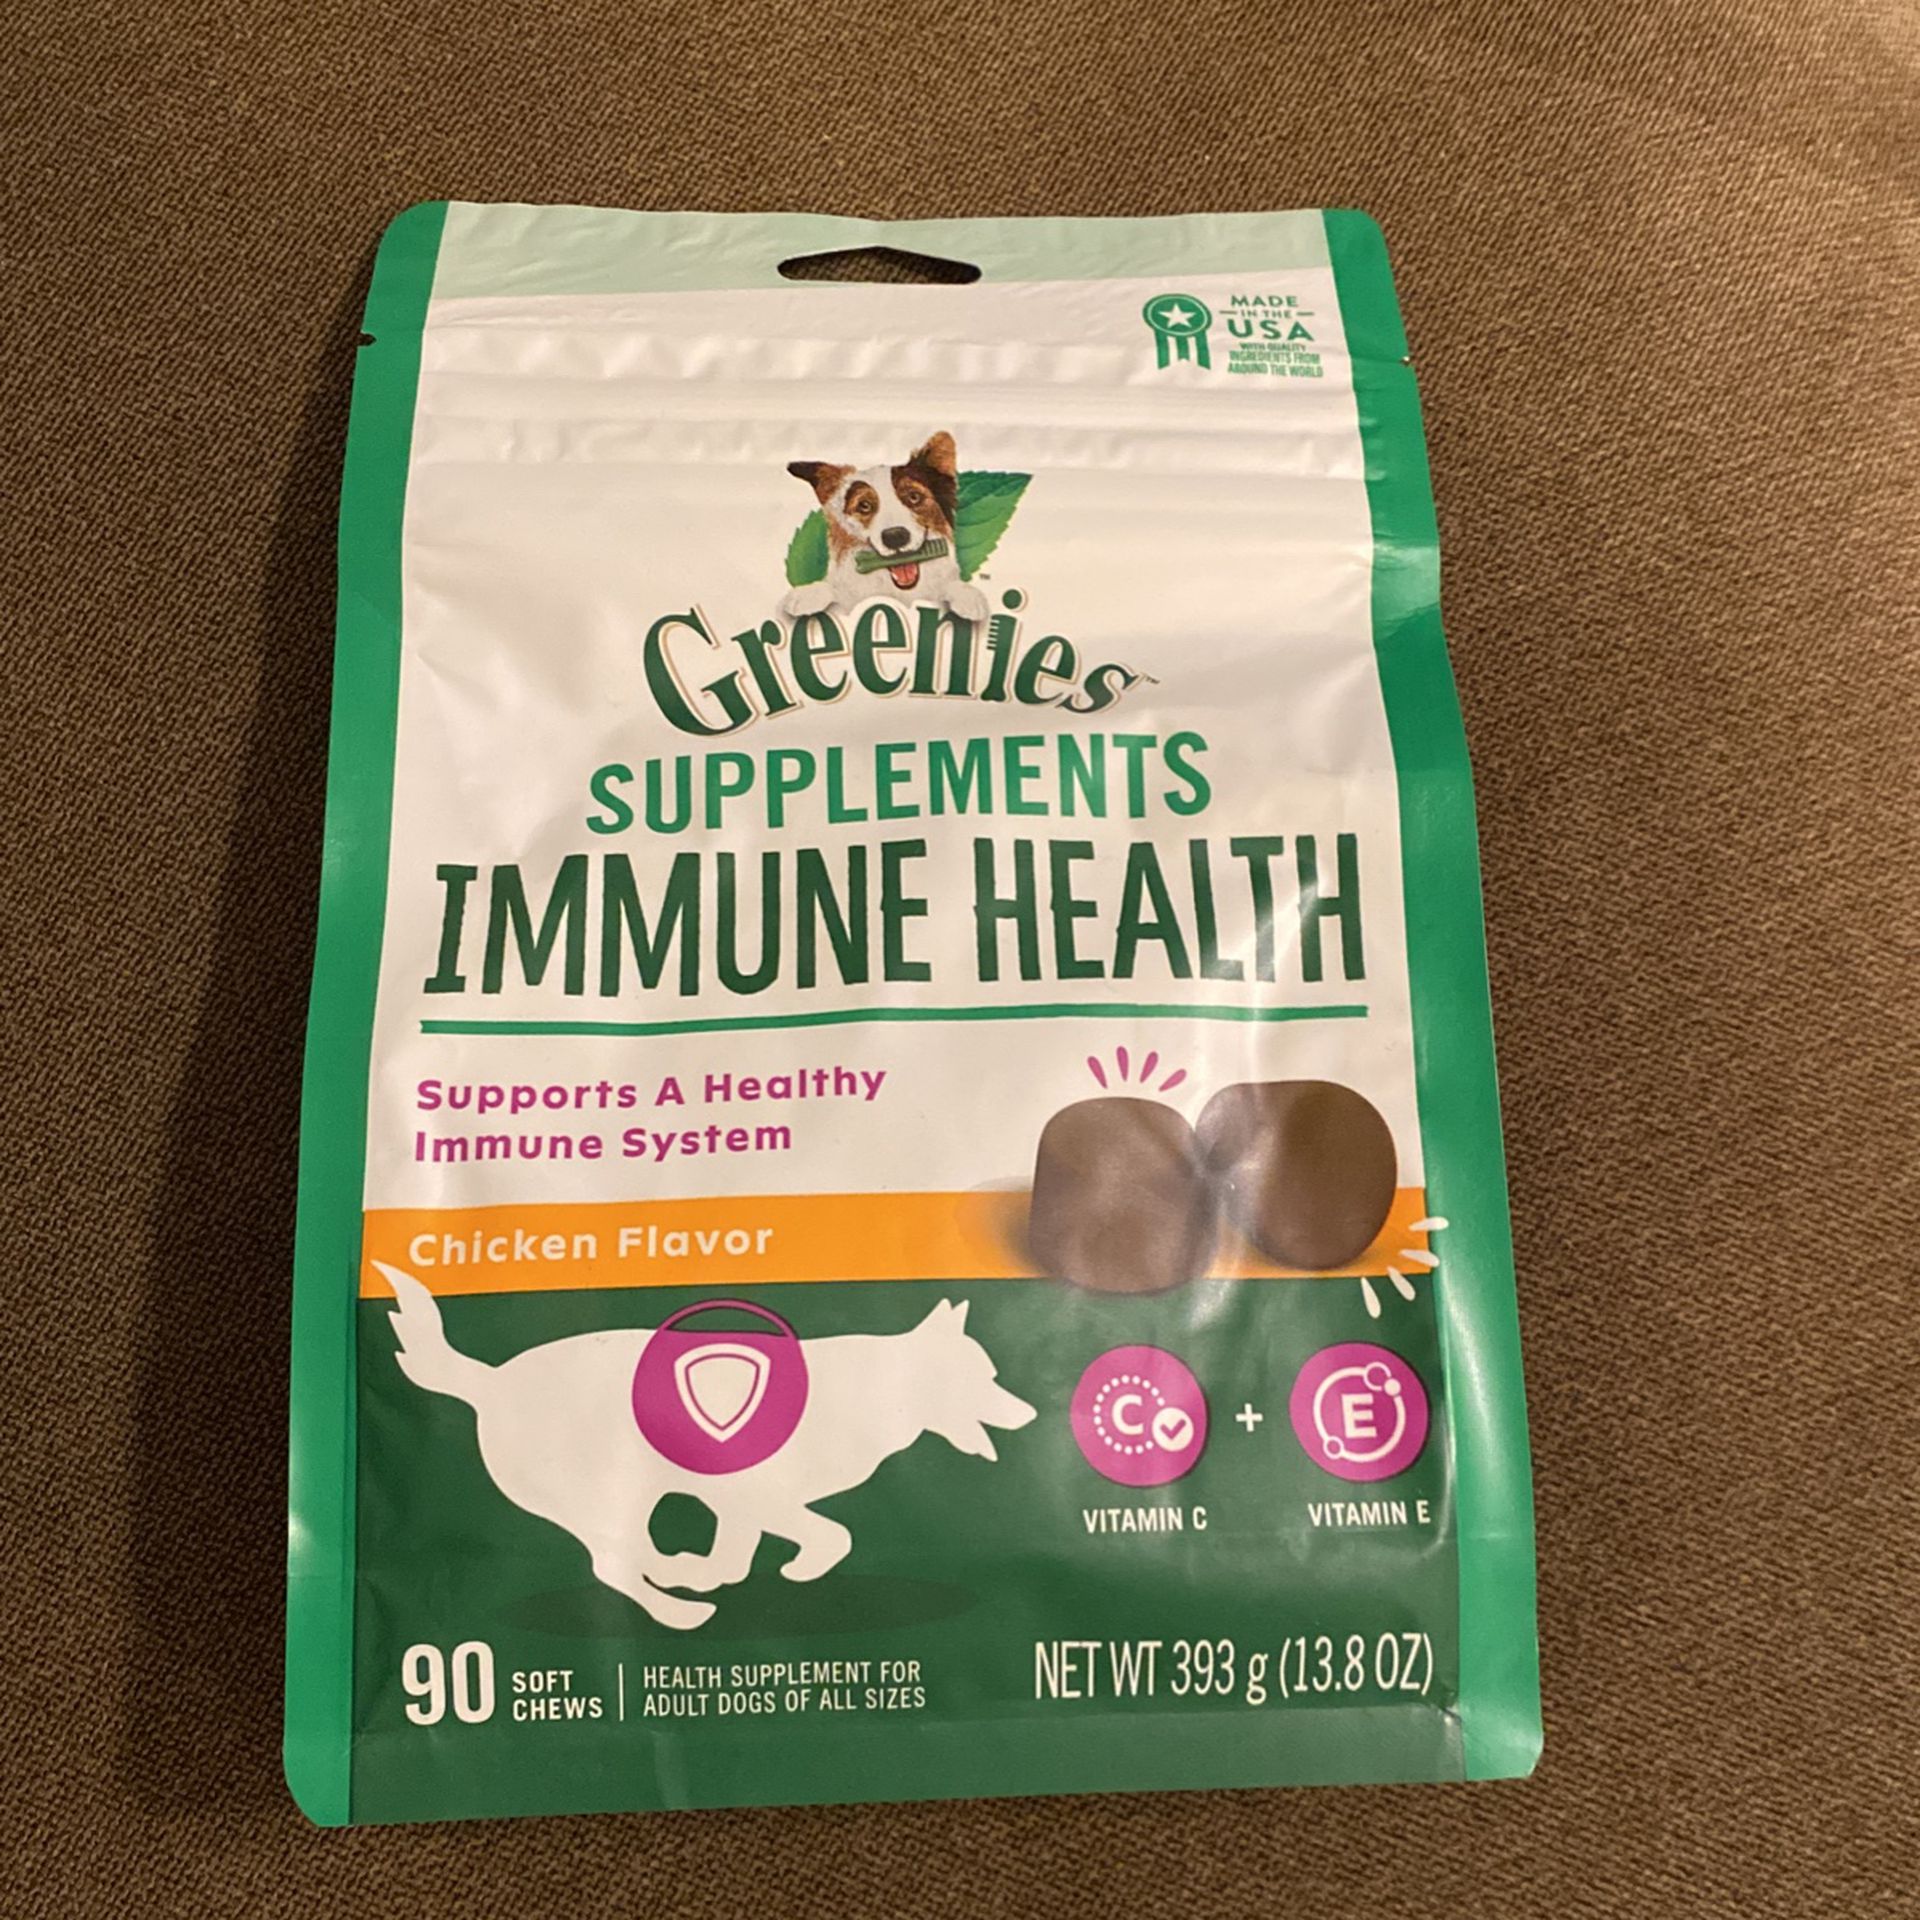 greenies supplements for immune health 